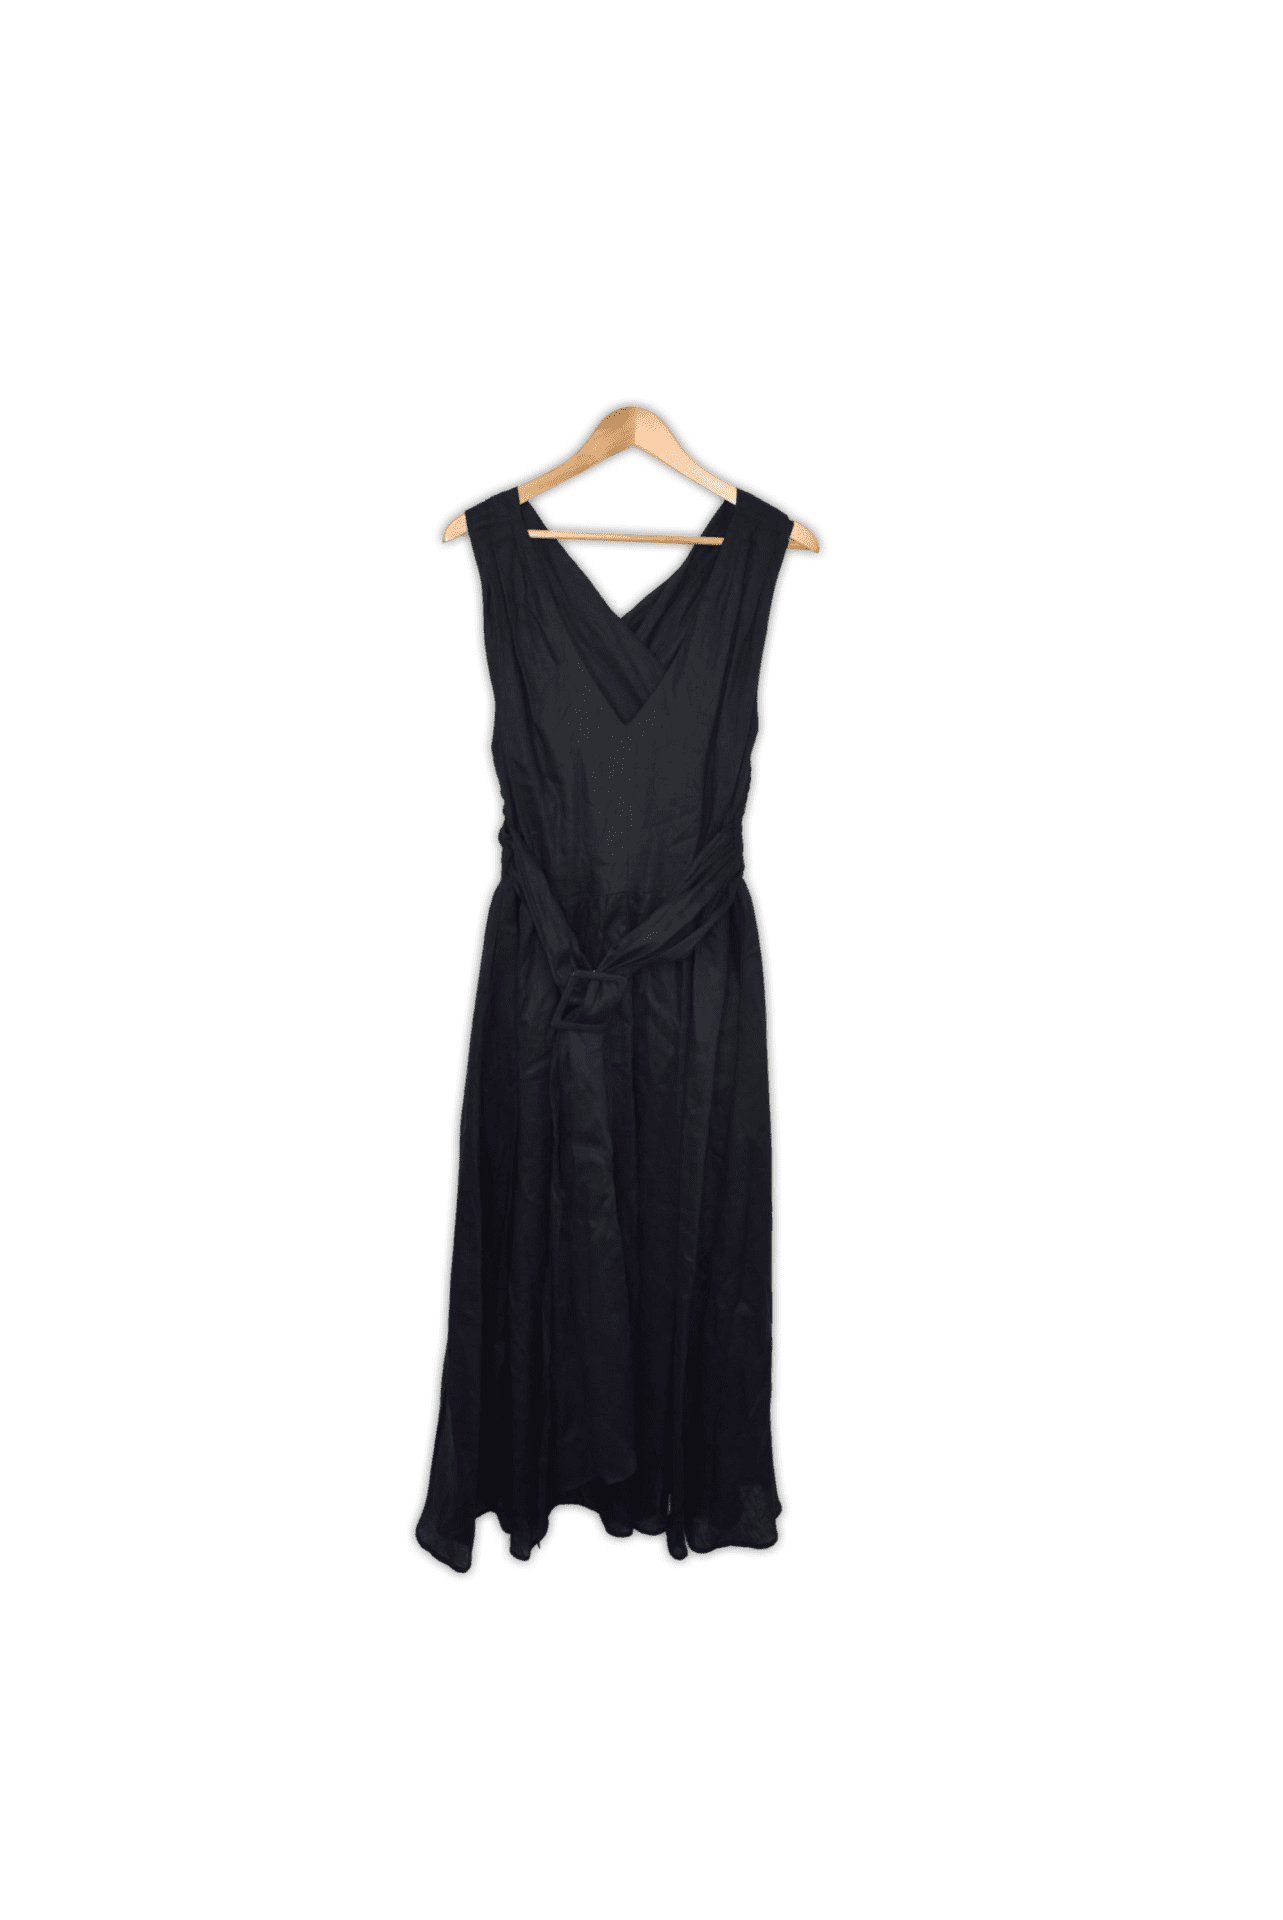 Trelise Cooper Ladies First Dress – Dove Hospice Shop